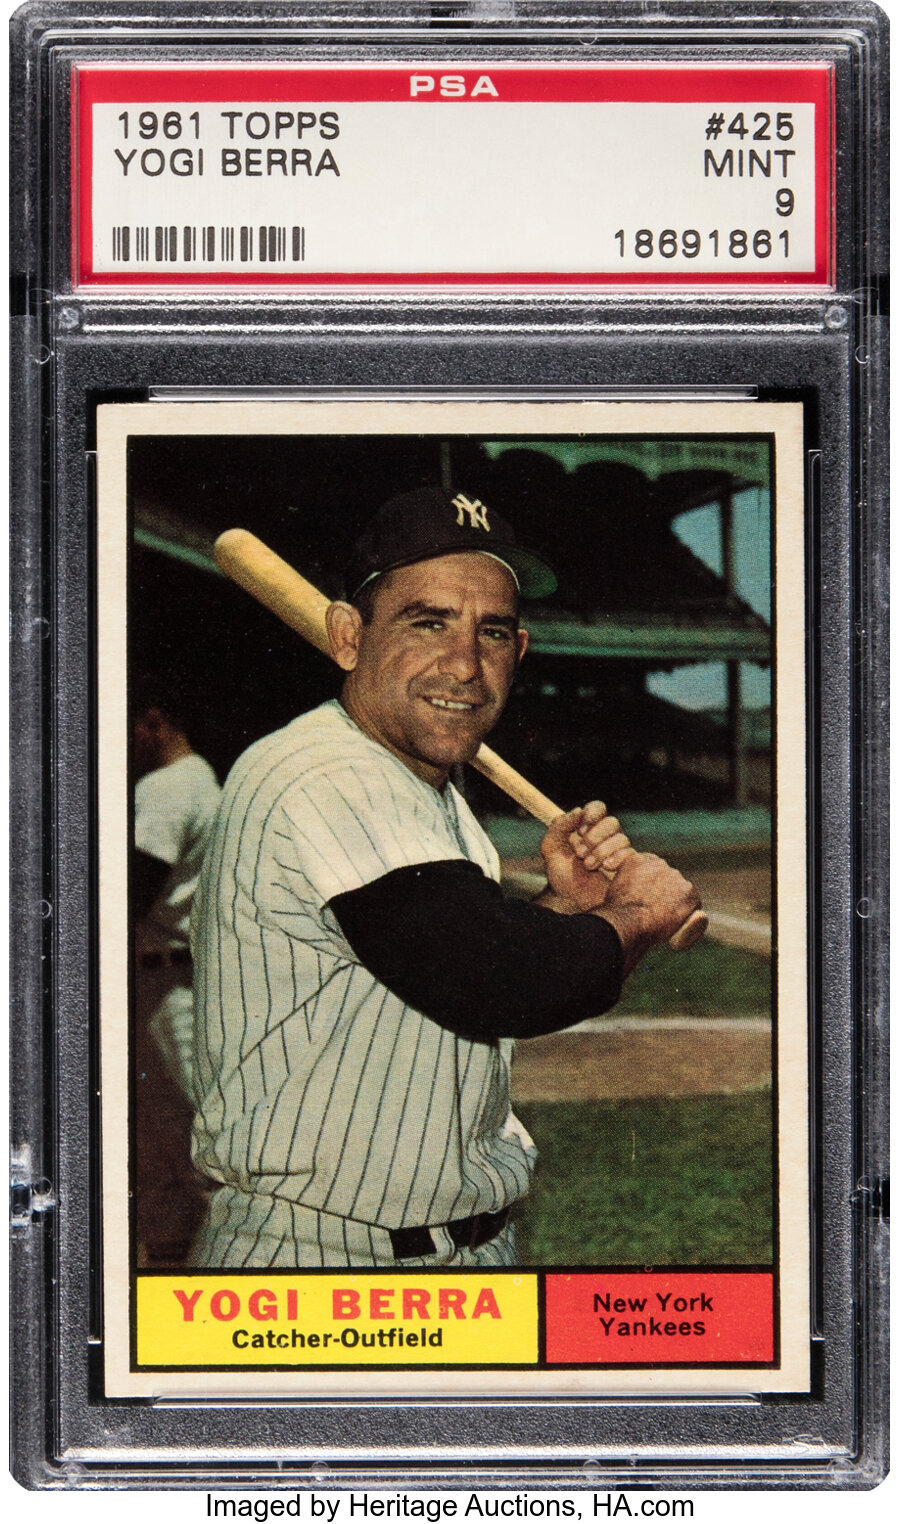 1961 Topps Yogi Berra #425 PSA Mint 9